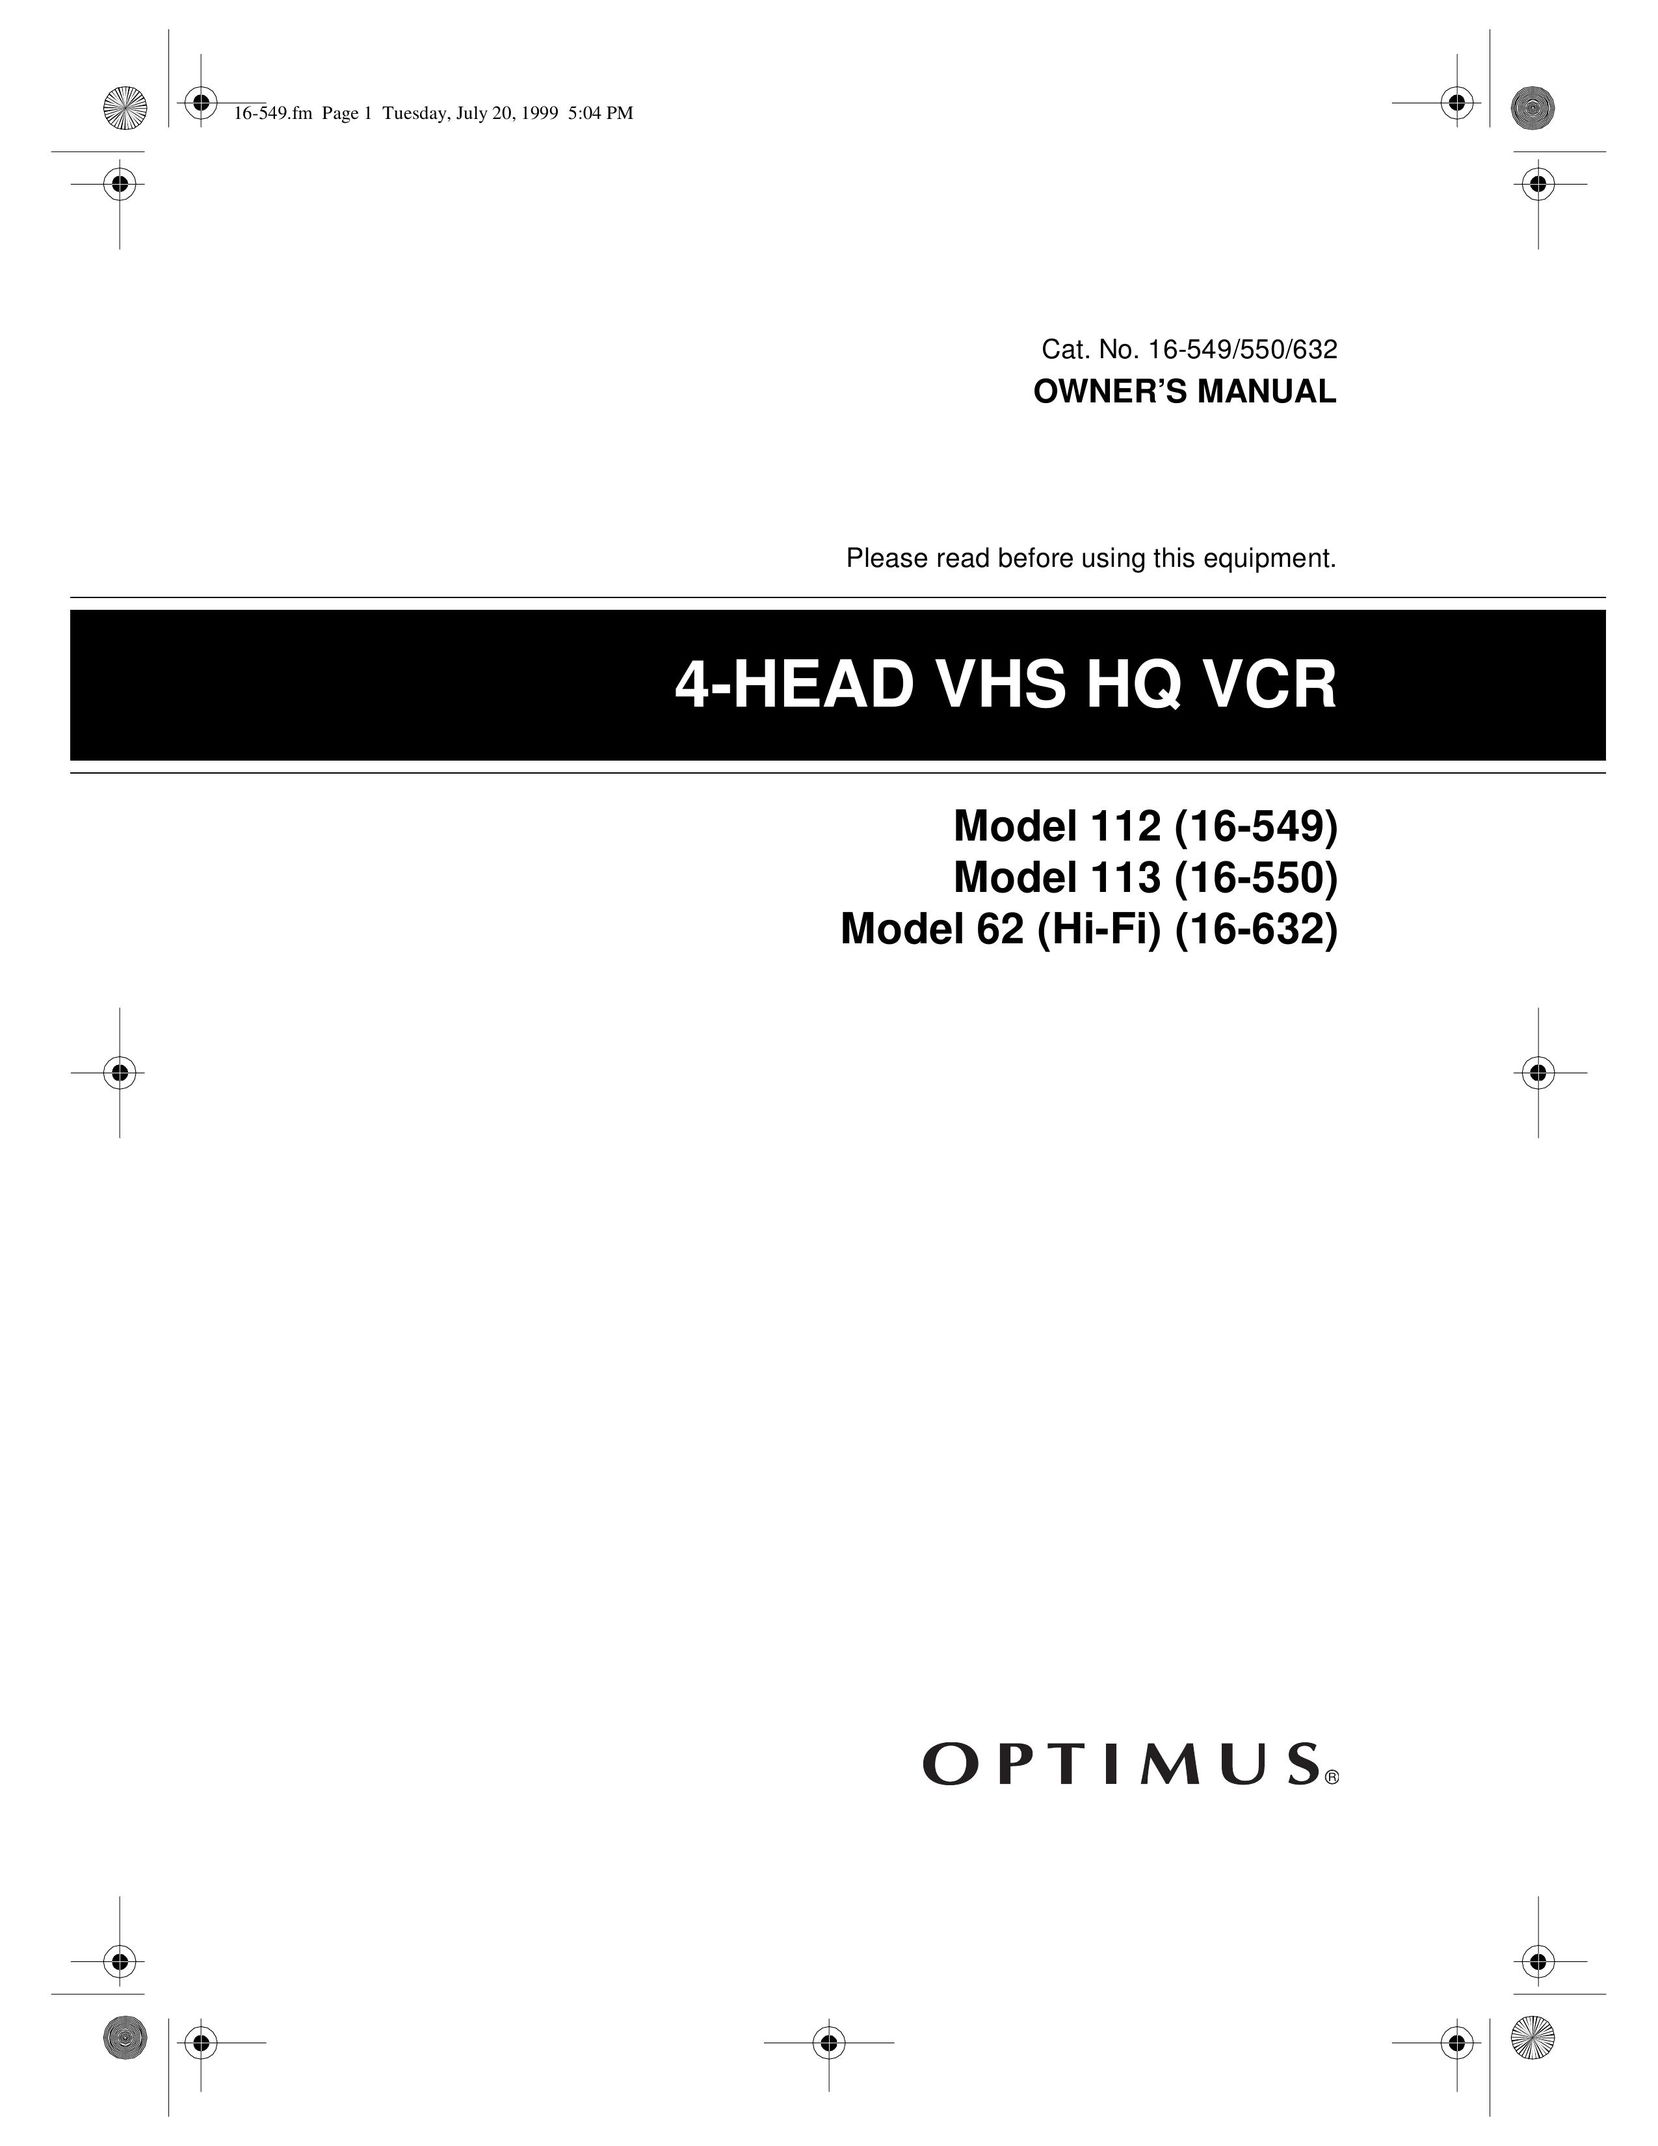 Optimus 62 (HI-FI) (16-632) VCR User Manual